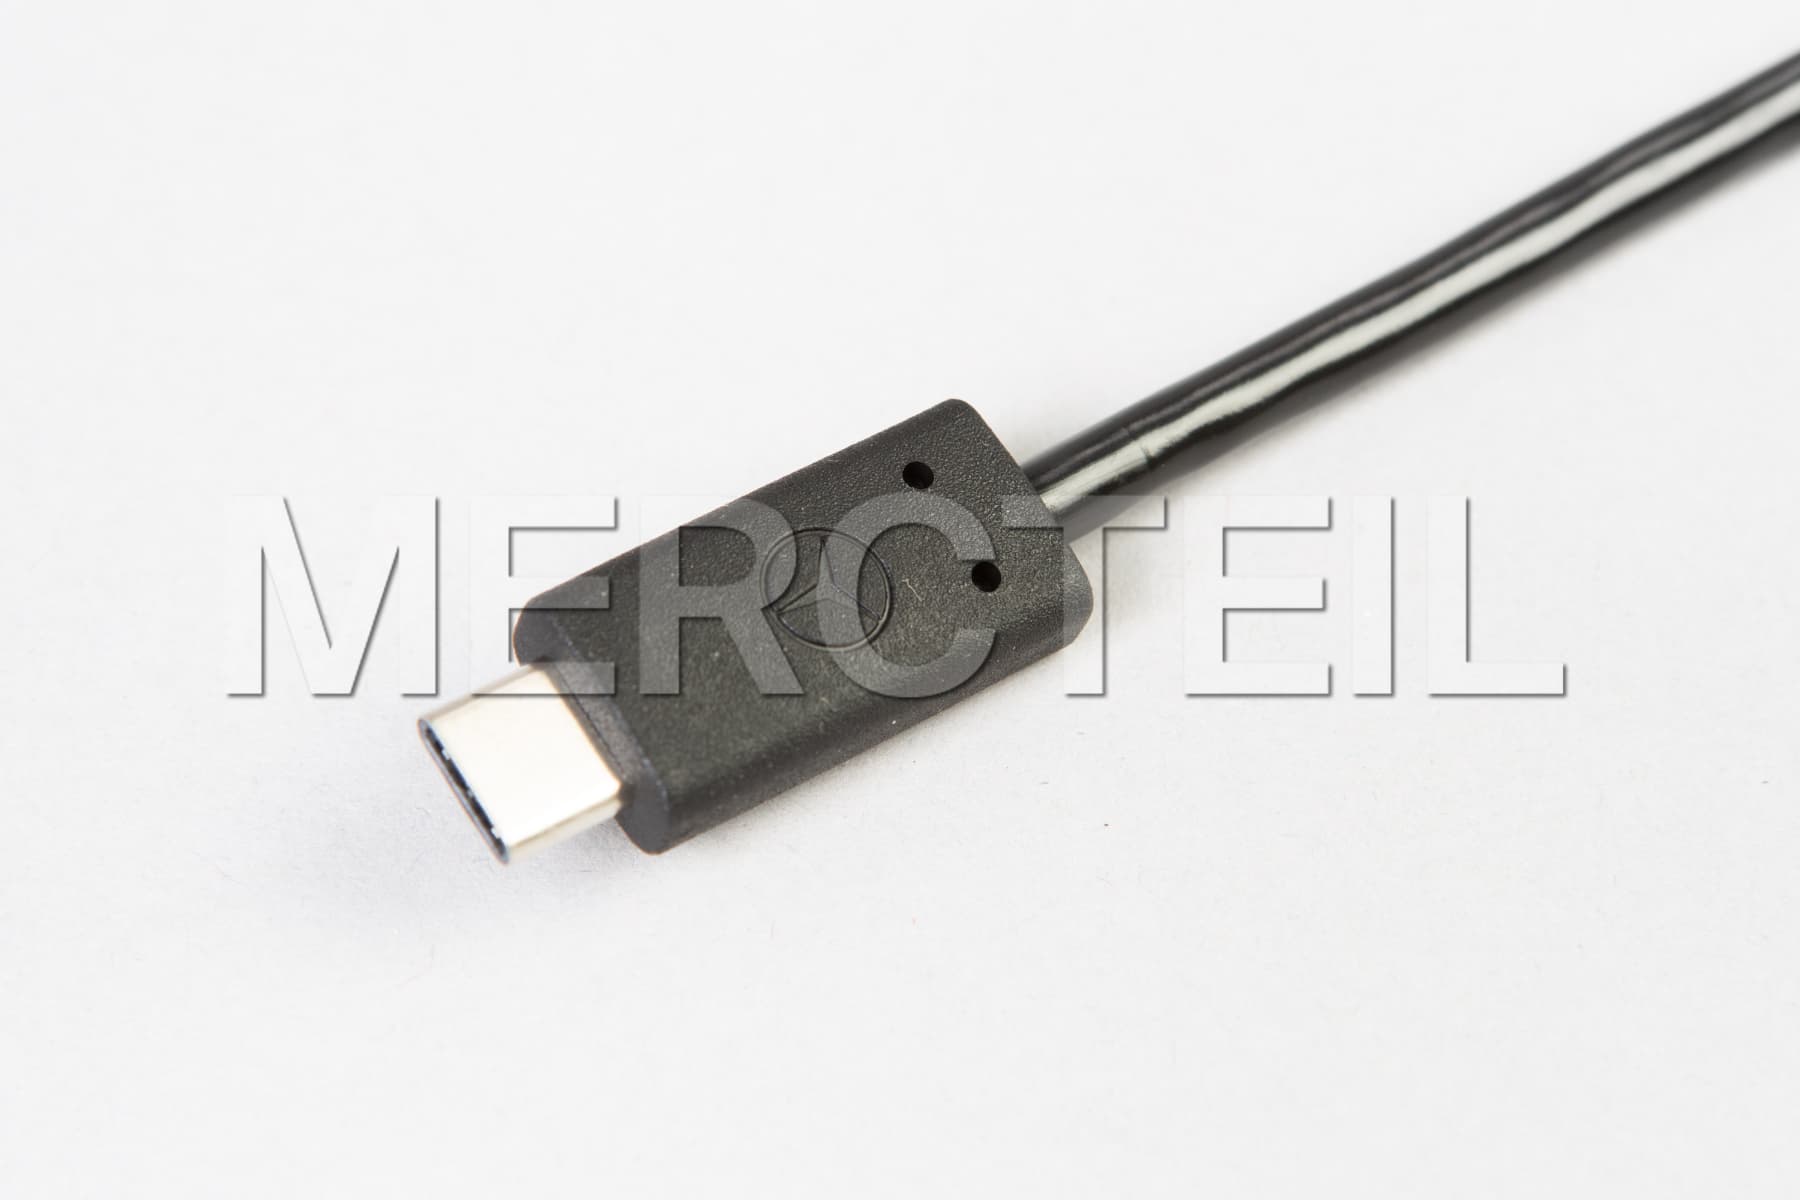 https://mercteil.com/s3/usb-media-interface-adapter-cable-genuine-mercedes-benz-accessories-1645026717077-x2.jpg